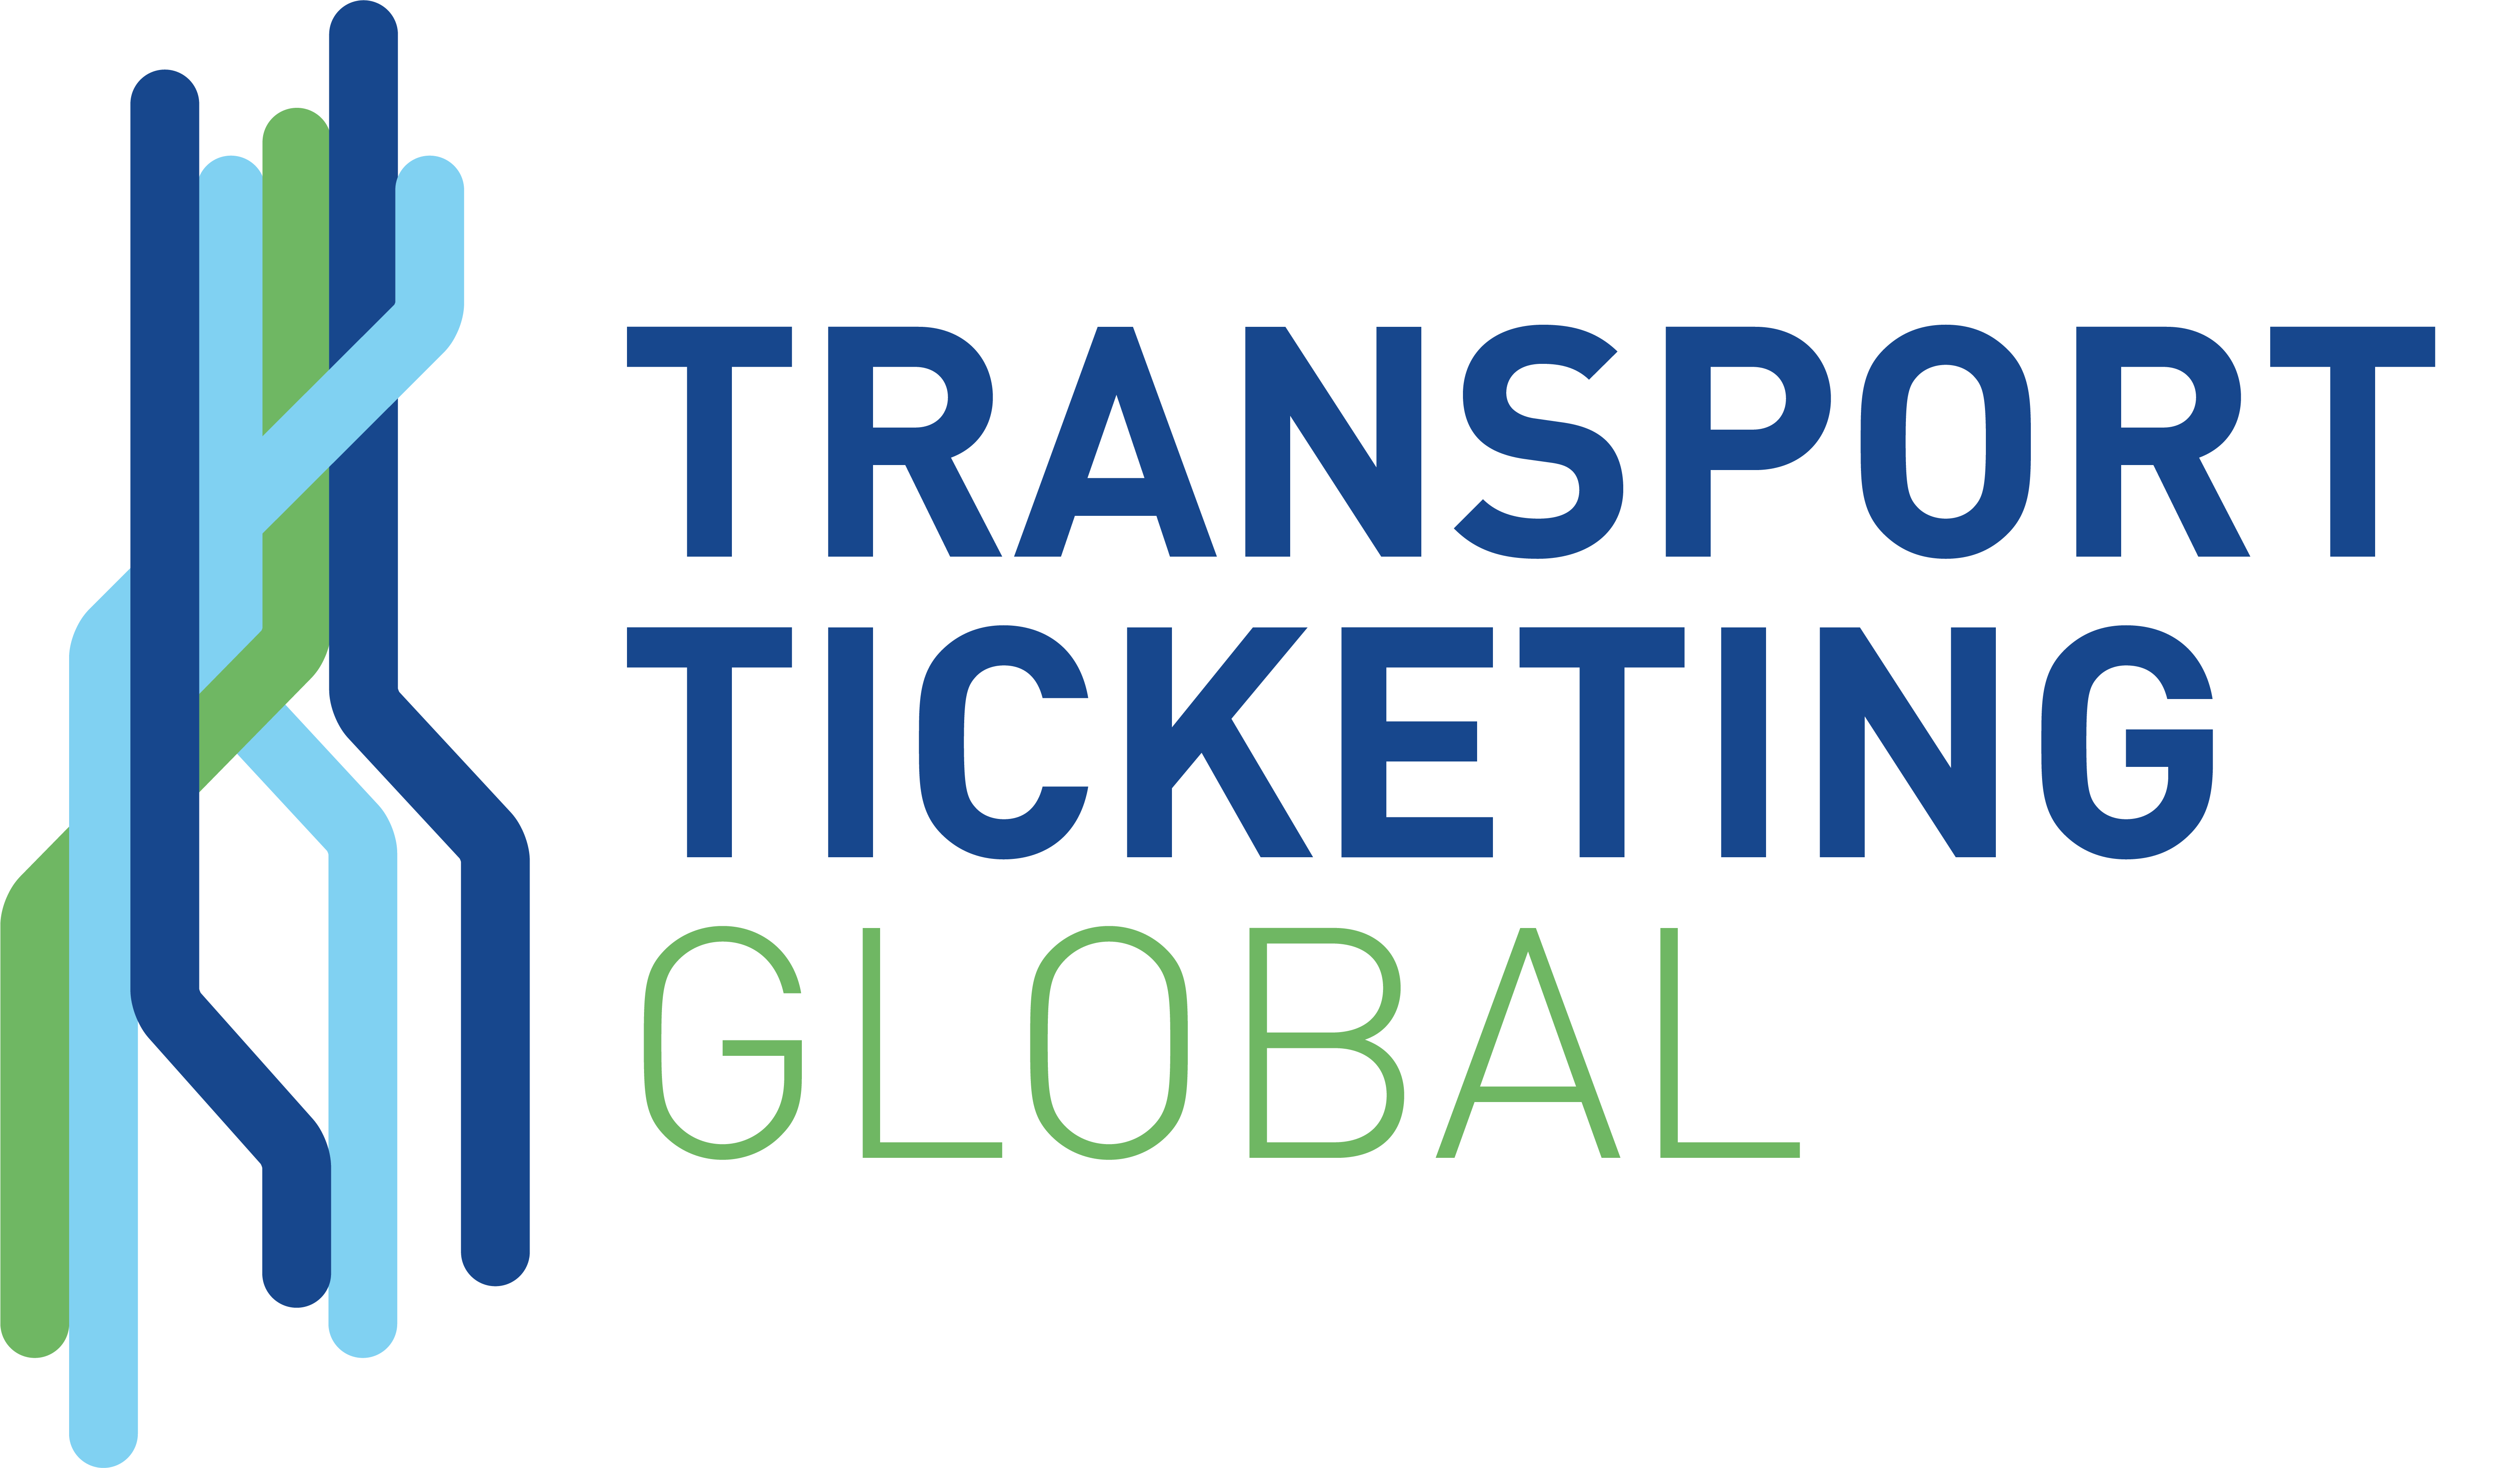 Global ticketing. Transport ticketing Global. Transport ticketing Global 2021. Transport ticketing Award. Transport tickets.